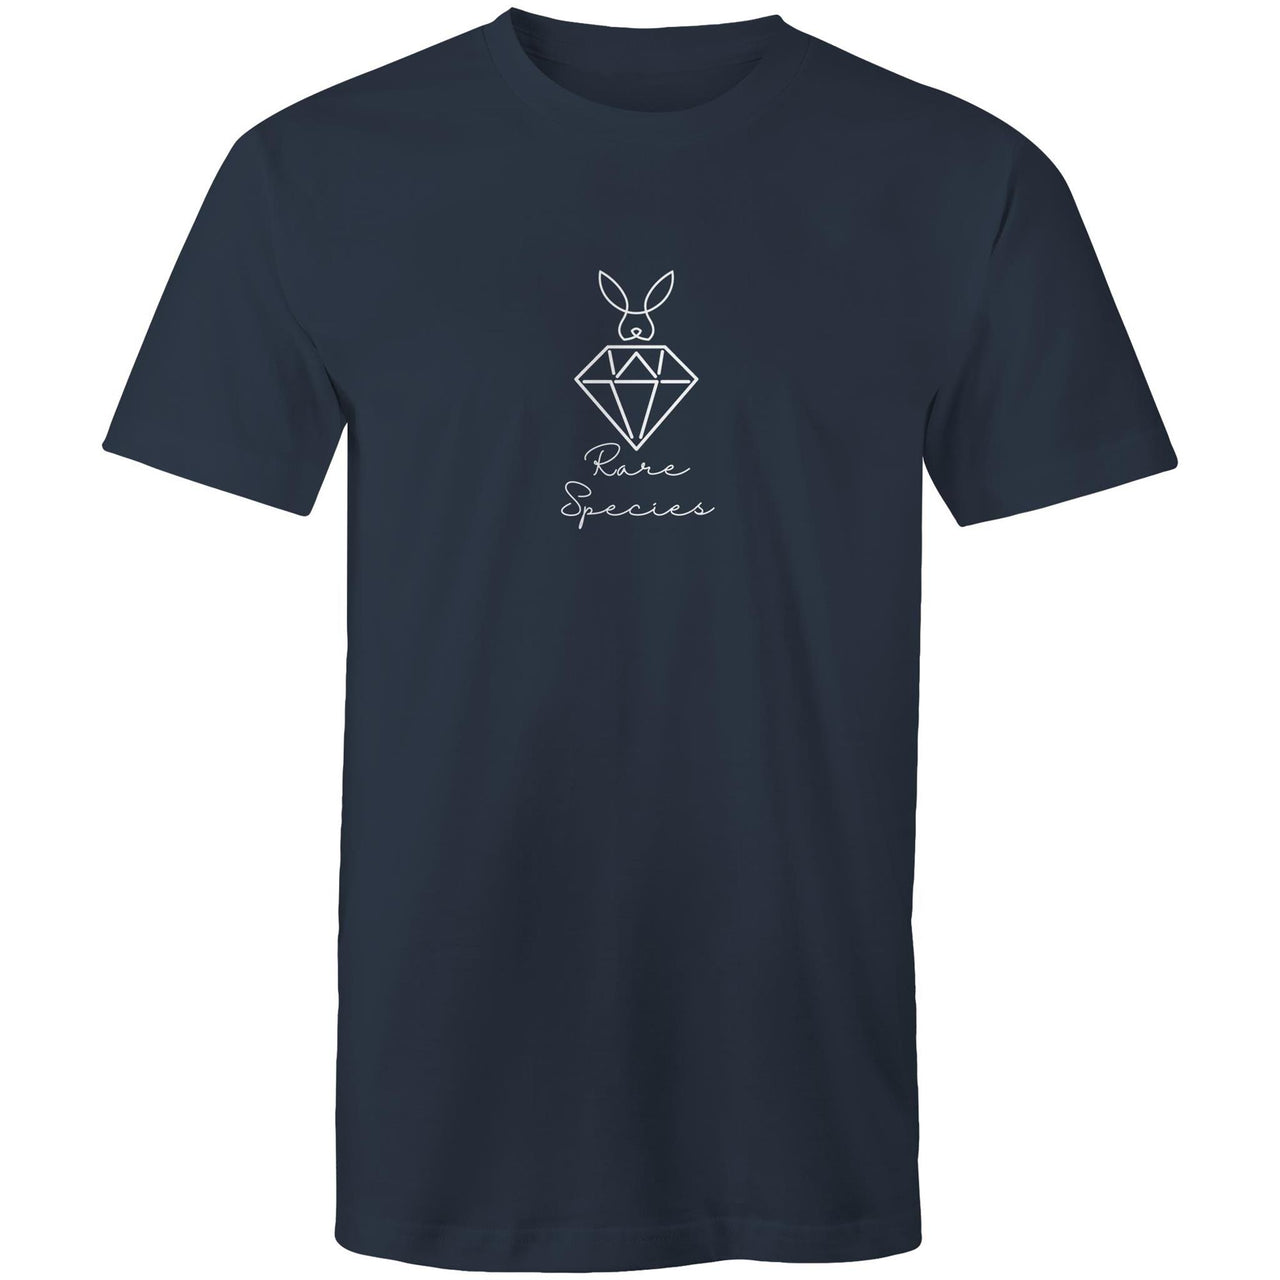 CBF Rare Species Crew T-Shirt Navy by CBF Clothing